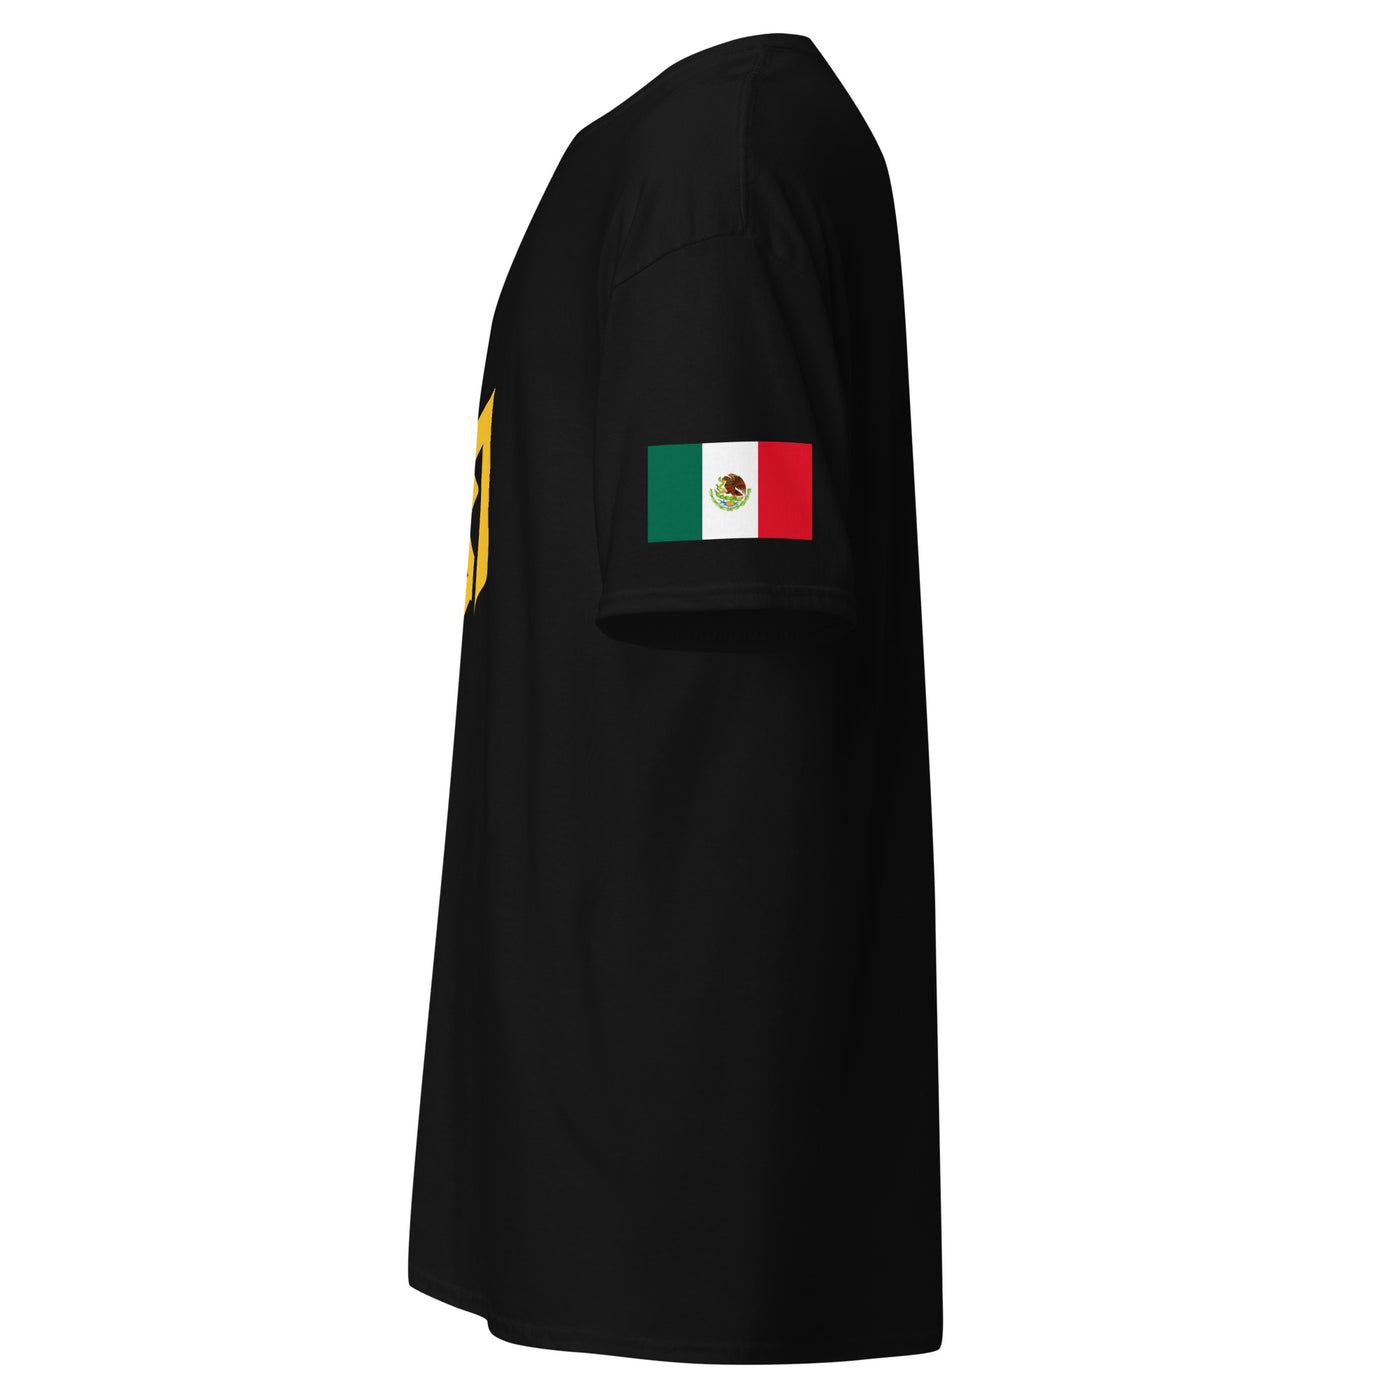 Marquis Gallegos Black Shirt (Both Flags)